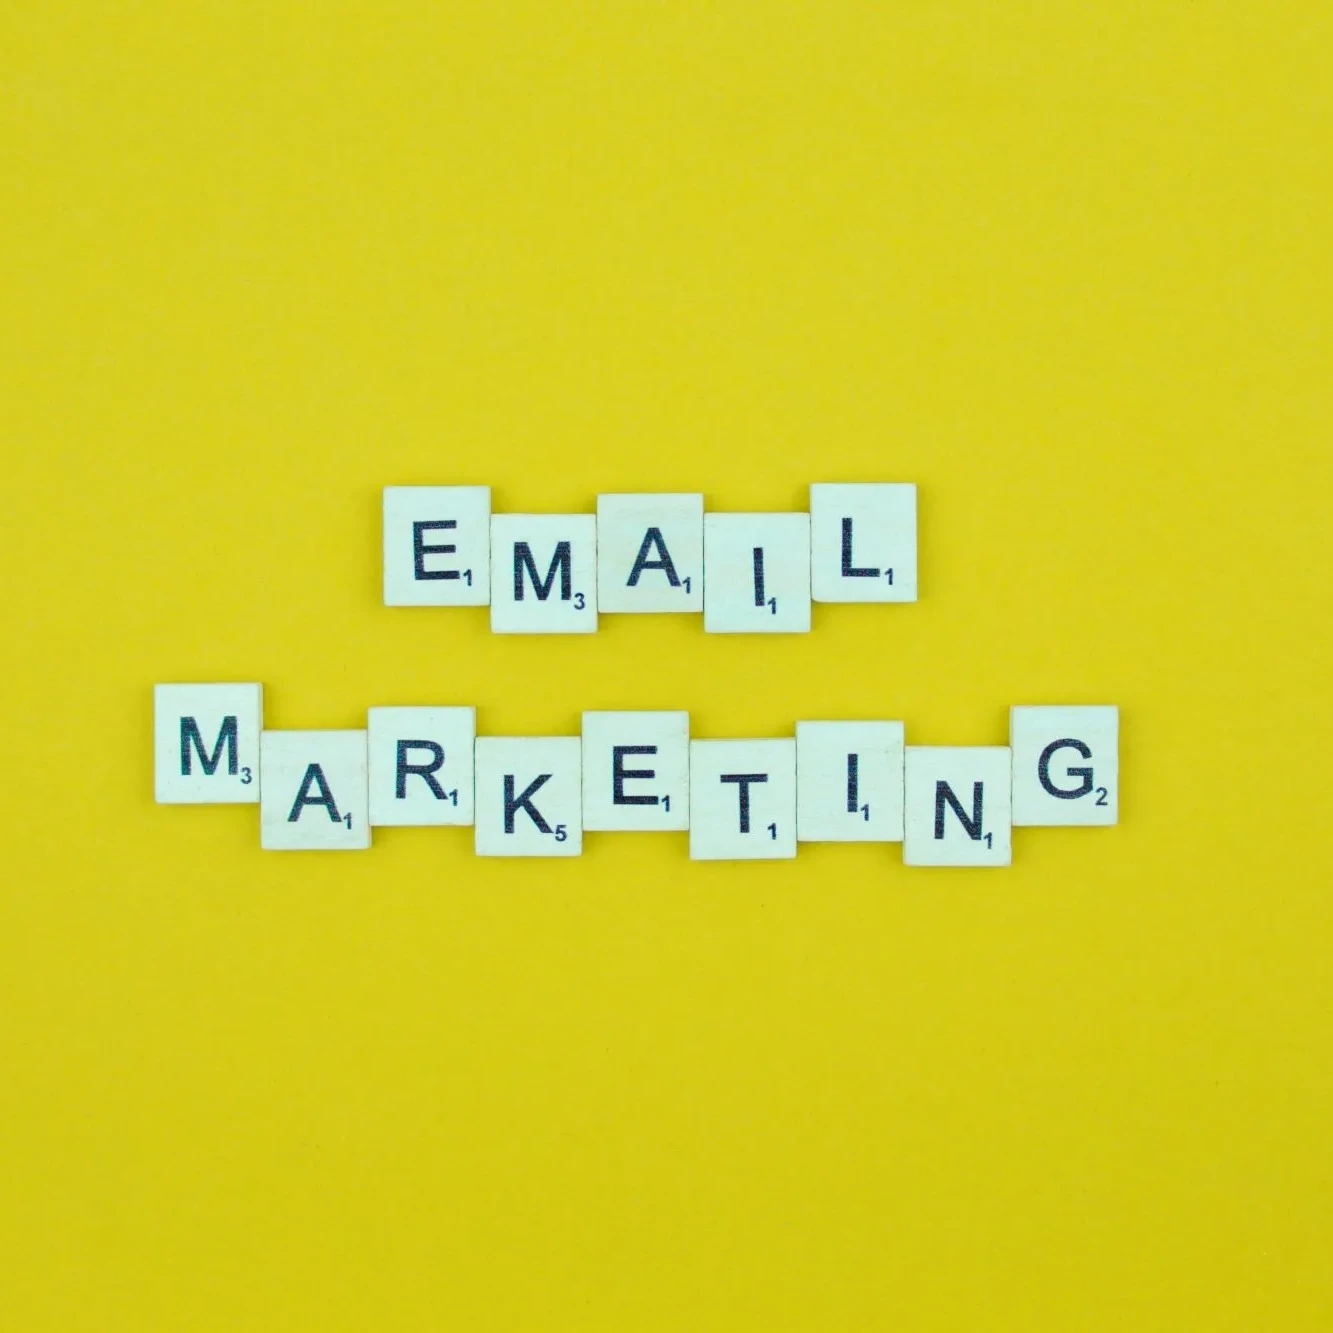 E-Mail Marketing Buchstabenkette